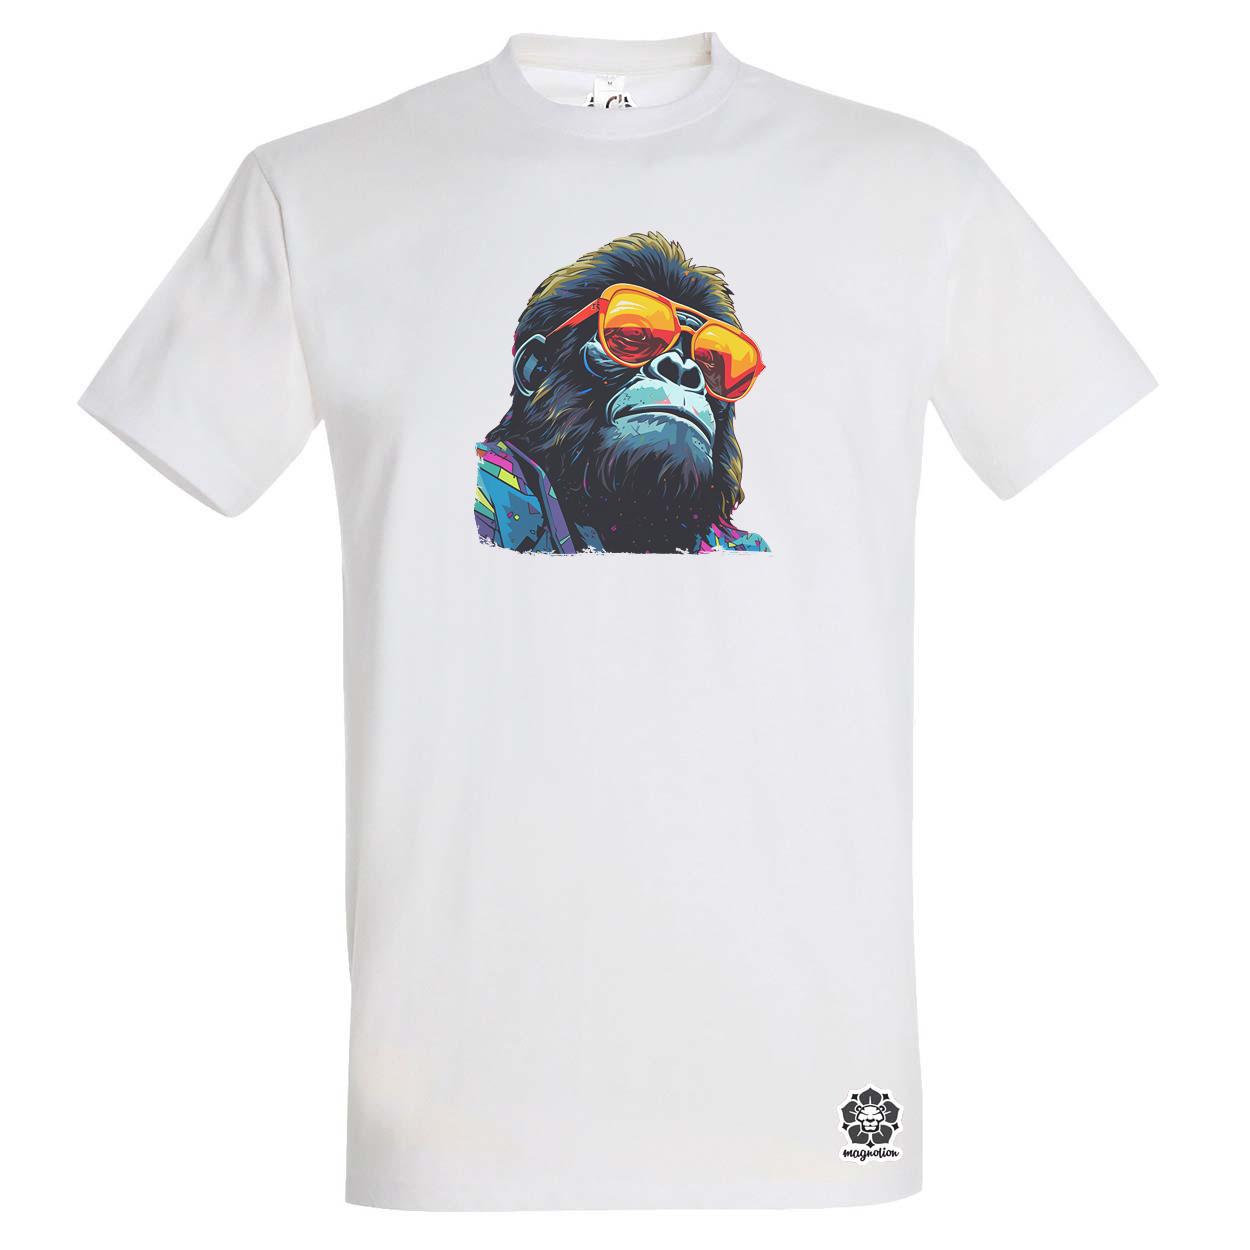 Laza gorilla v1